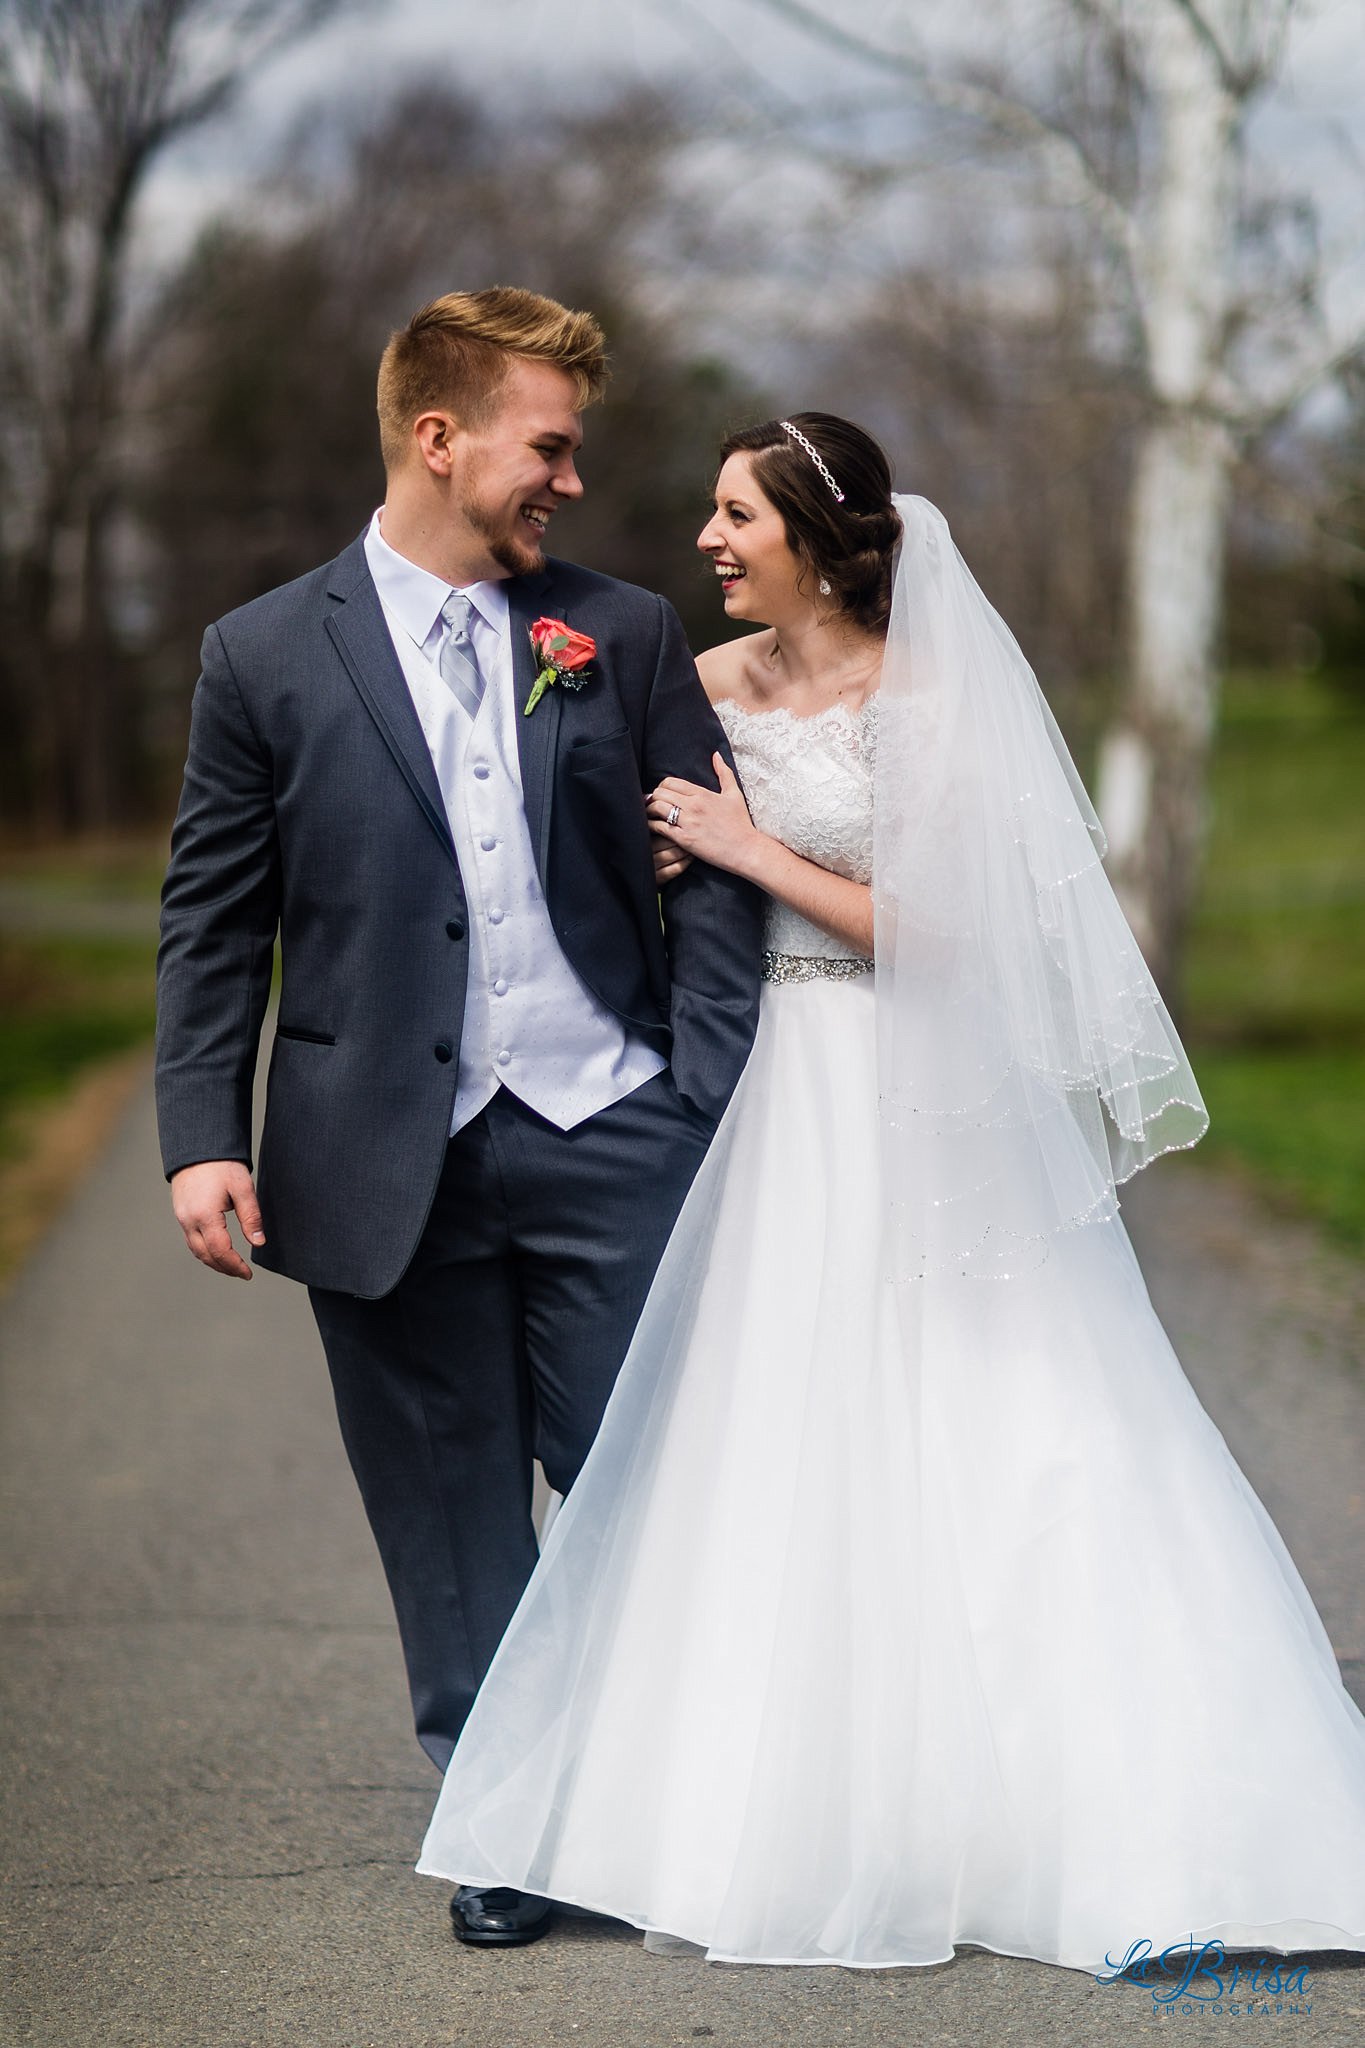 Cierra & Joshua | Wedding Photography Preview | Haymarket, VA | Chris Hsieh